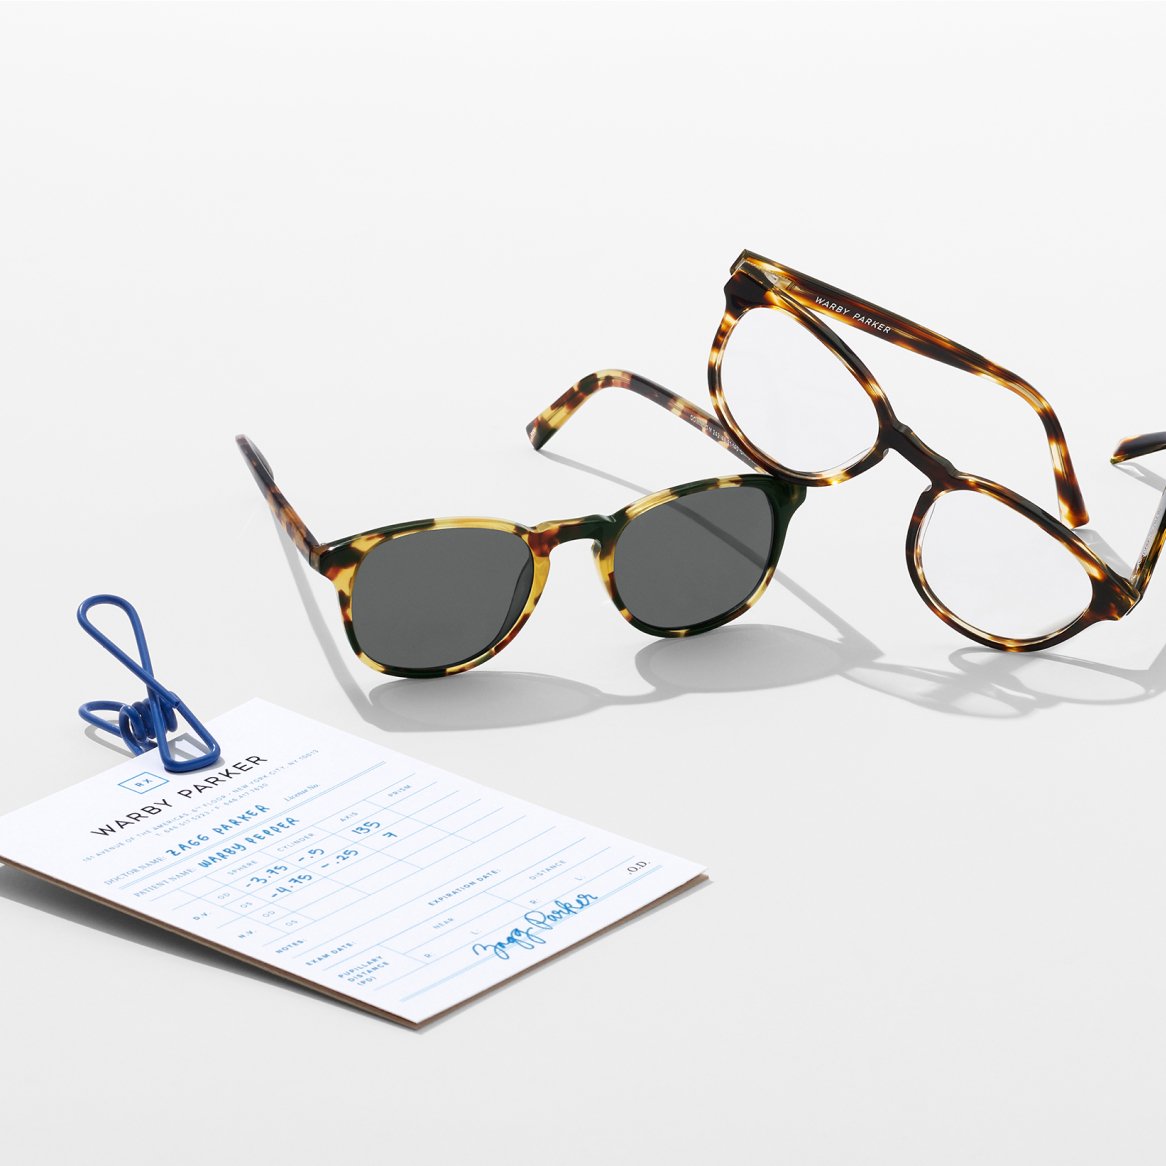 Glasses and sunglasses alongside prescription paperwork